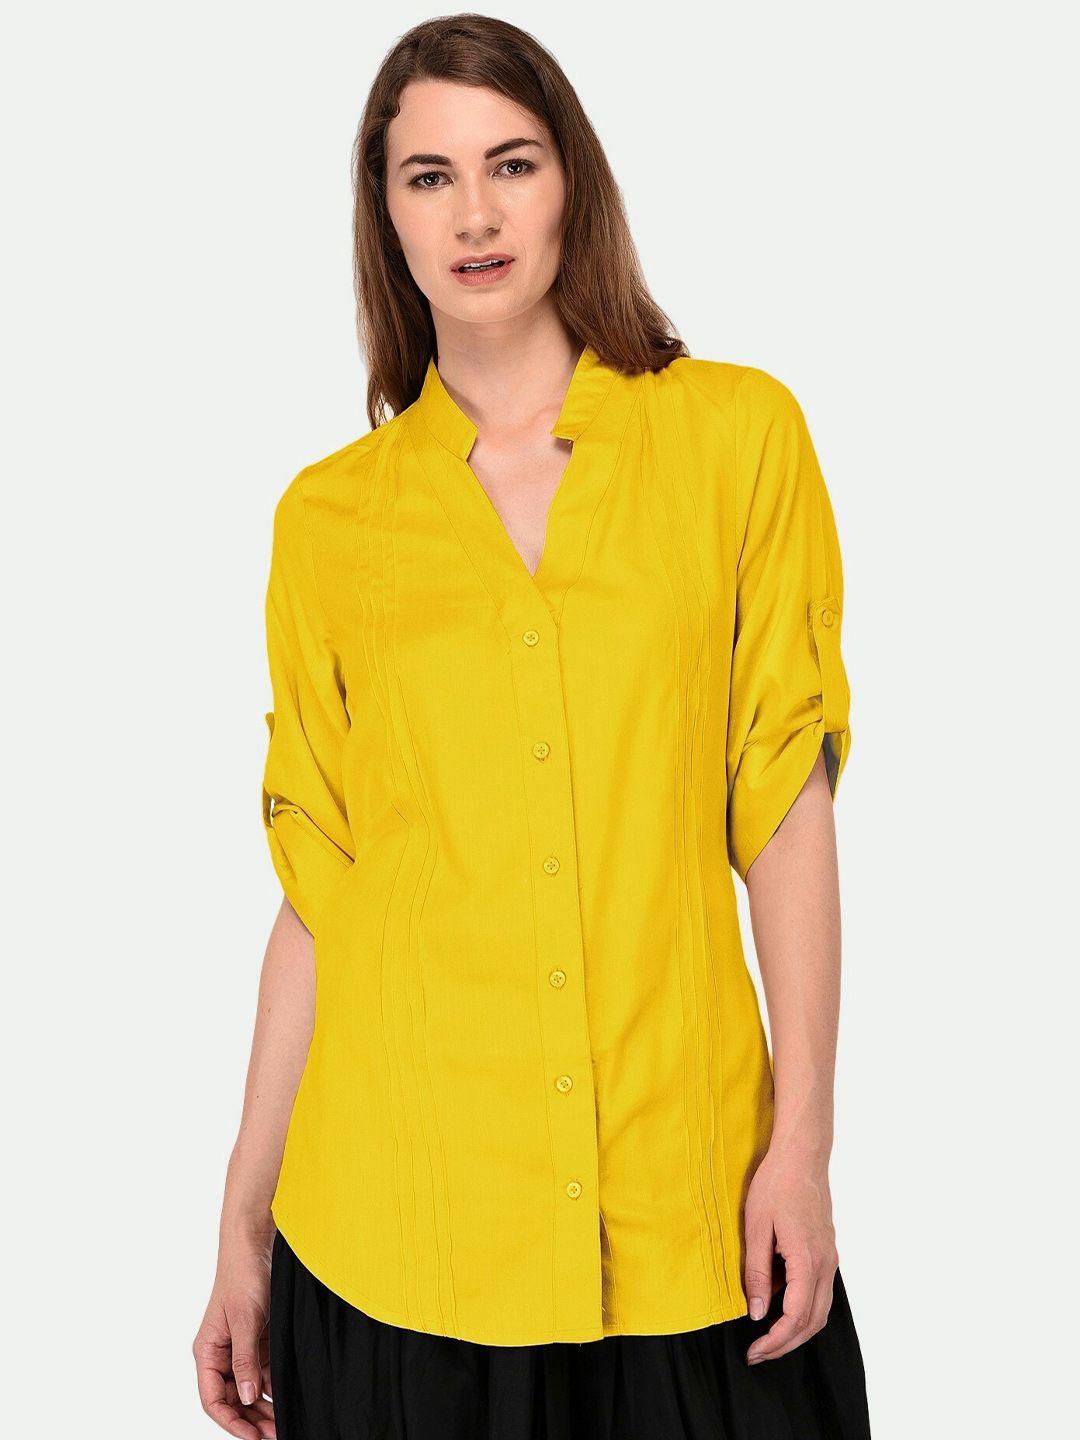 patrorna women mustard comfort solid casual shirt